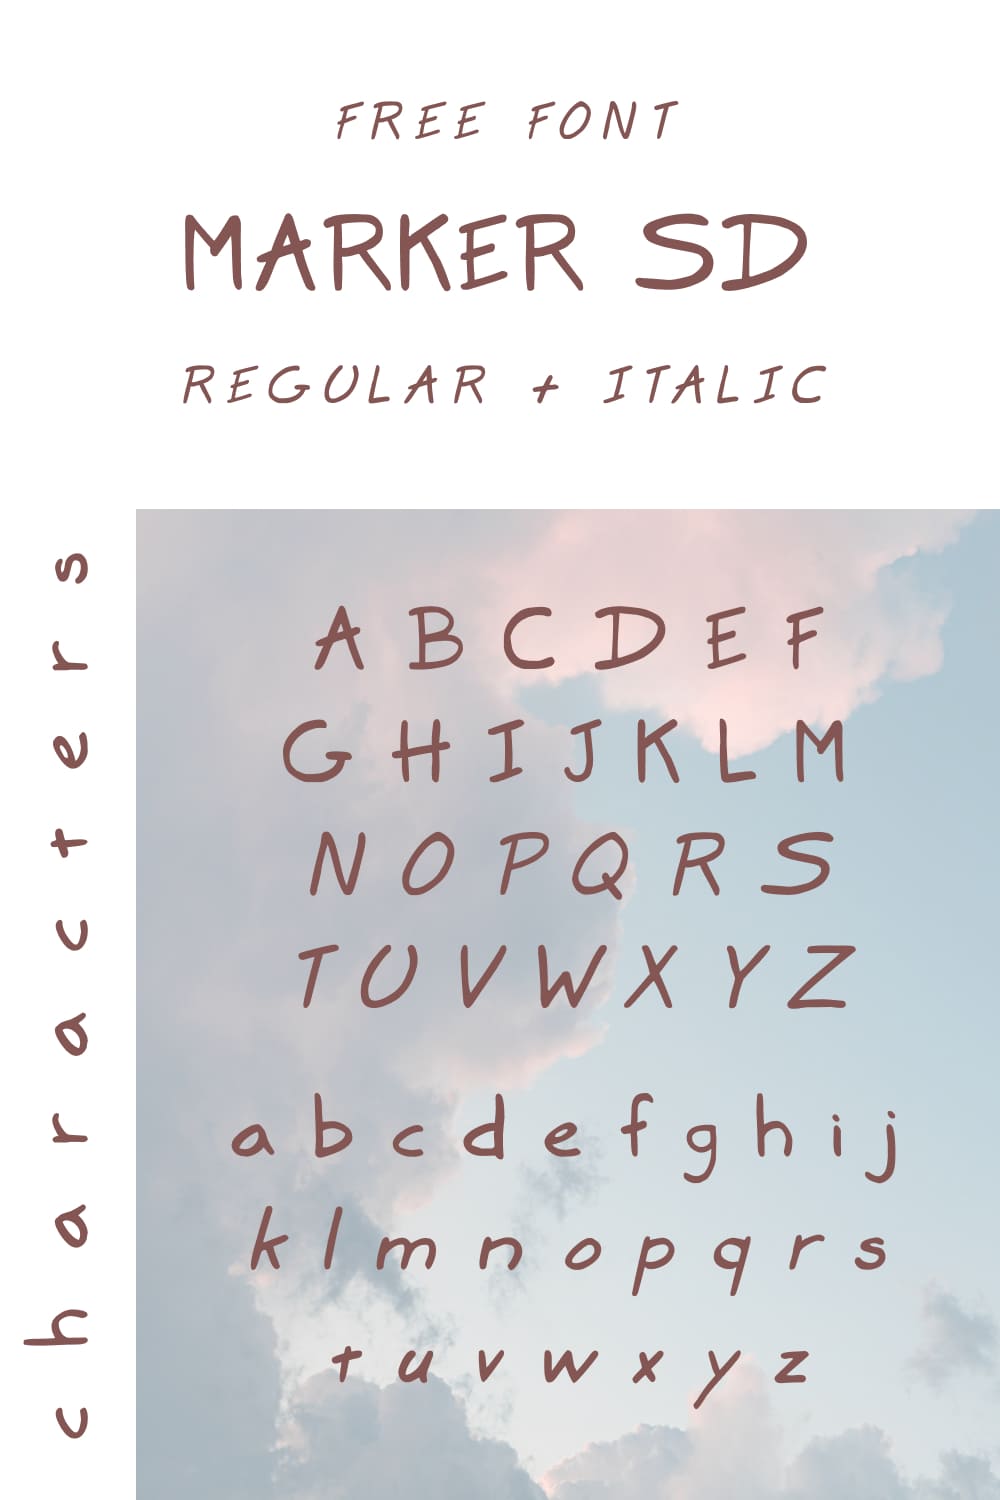 Marker SD - free marker font Pinterest Collage Image by MasterBundles.